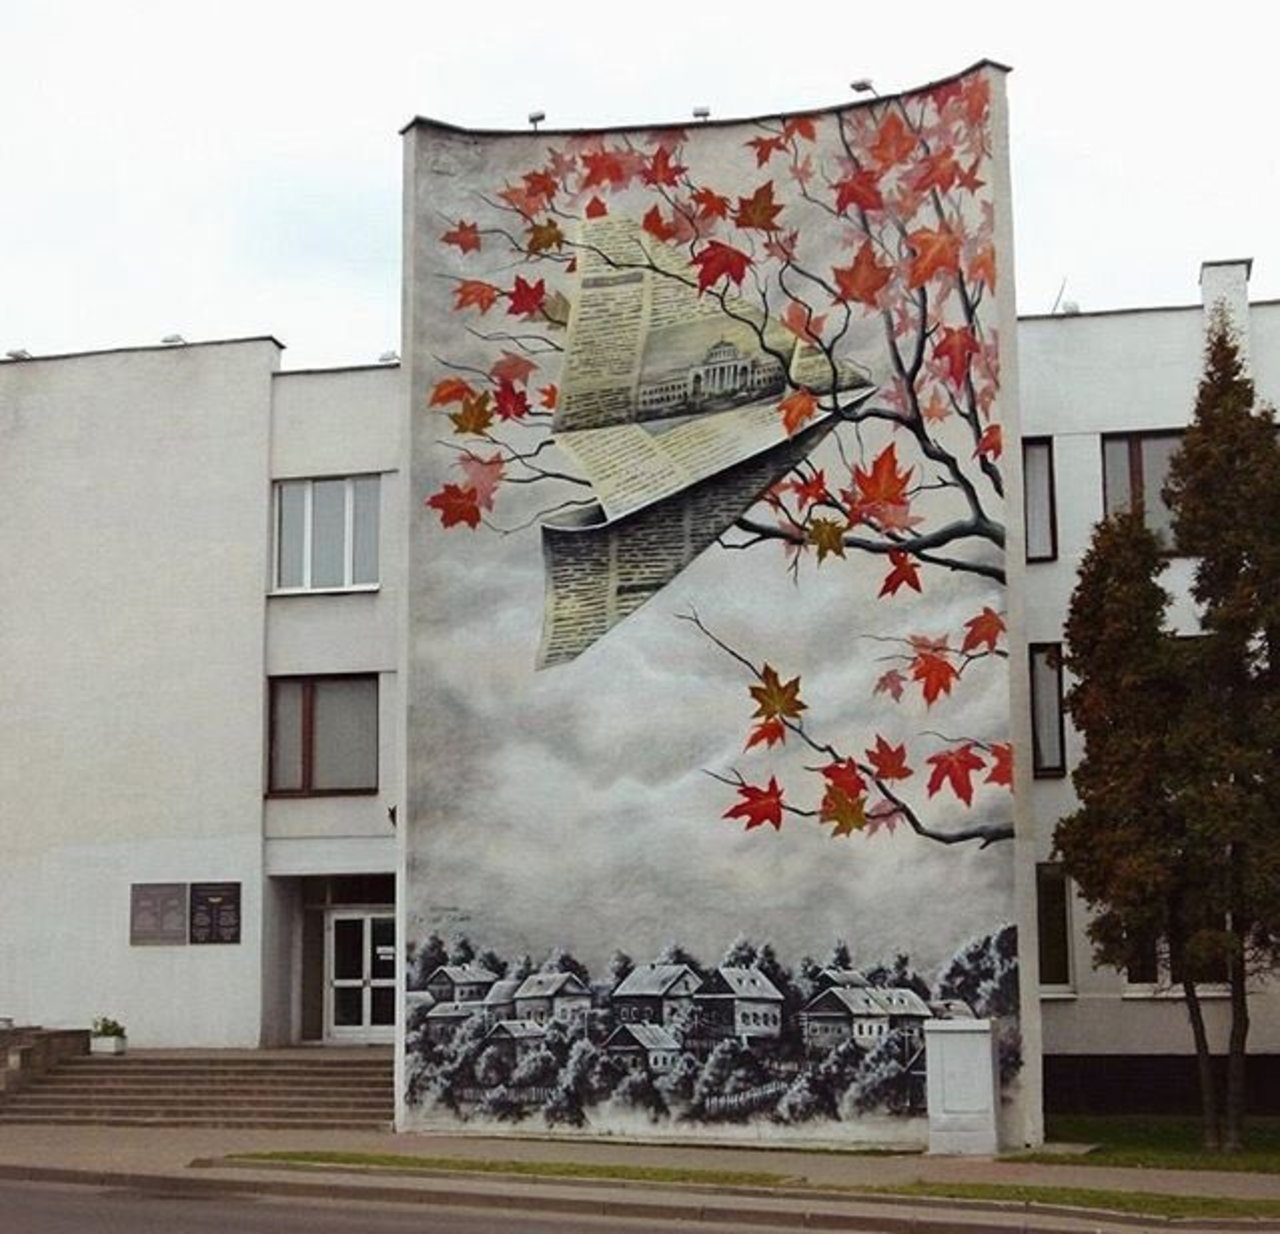 https://goo.gl/t4fpx2 RT GoogleStreetArt: New Street Art by MUTUS in Belarus 

#art #graffiti #mural #streetart https://t.co/fKJFRbWmtF